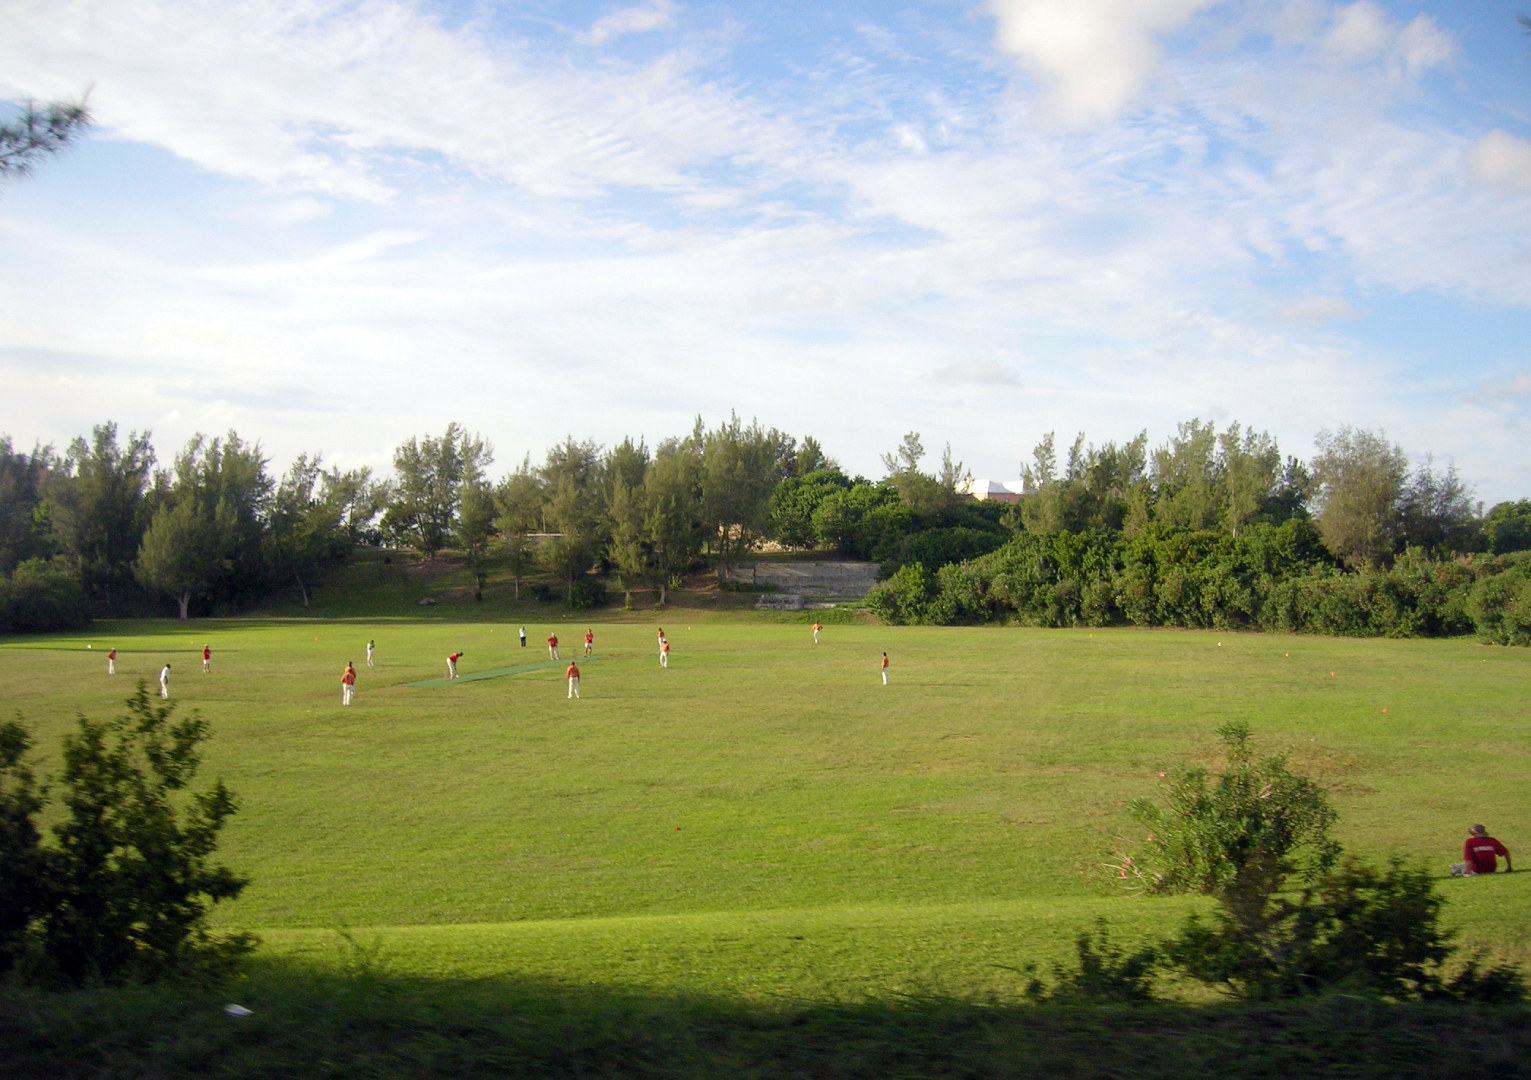 Shelly Bay Field